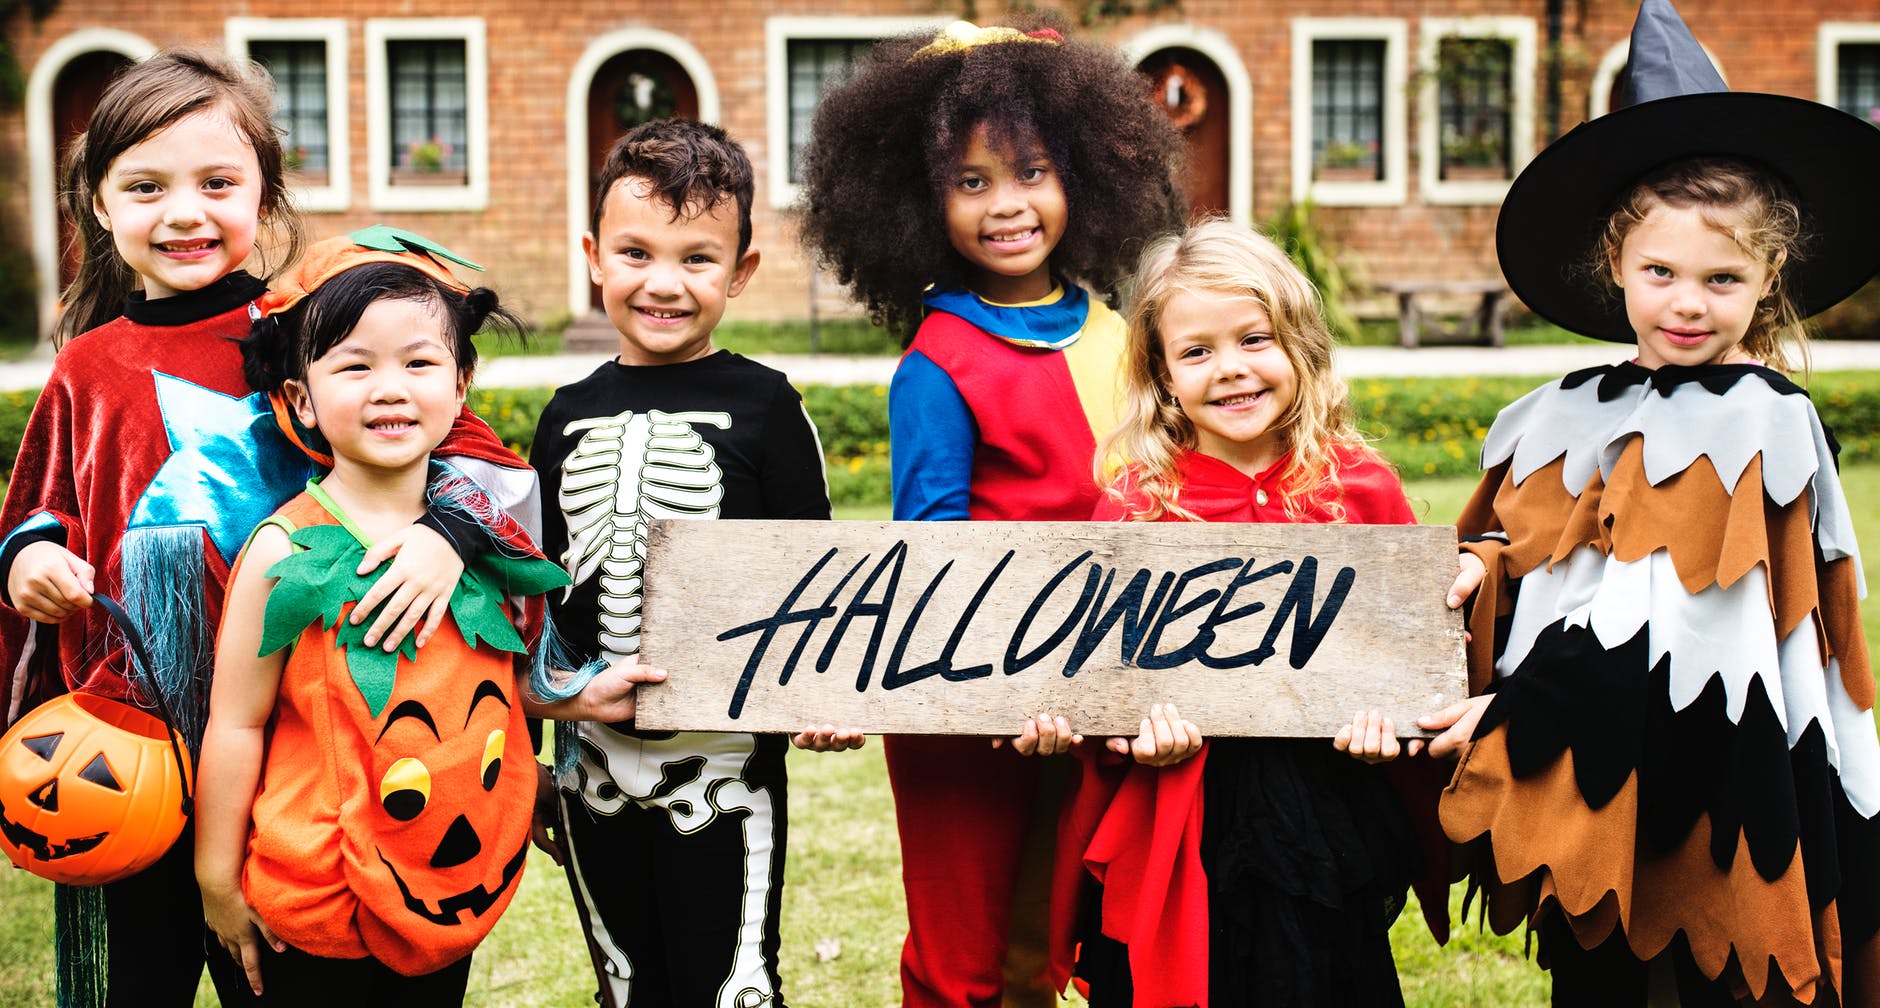 photo of children in halloween costumes smiling